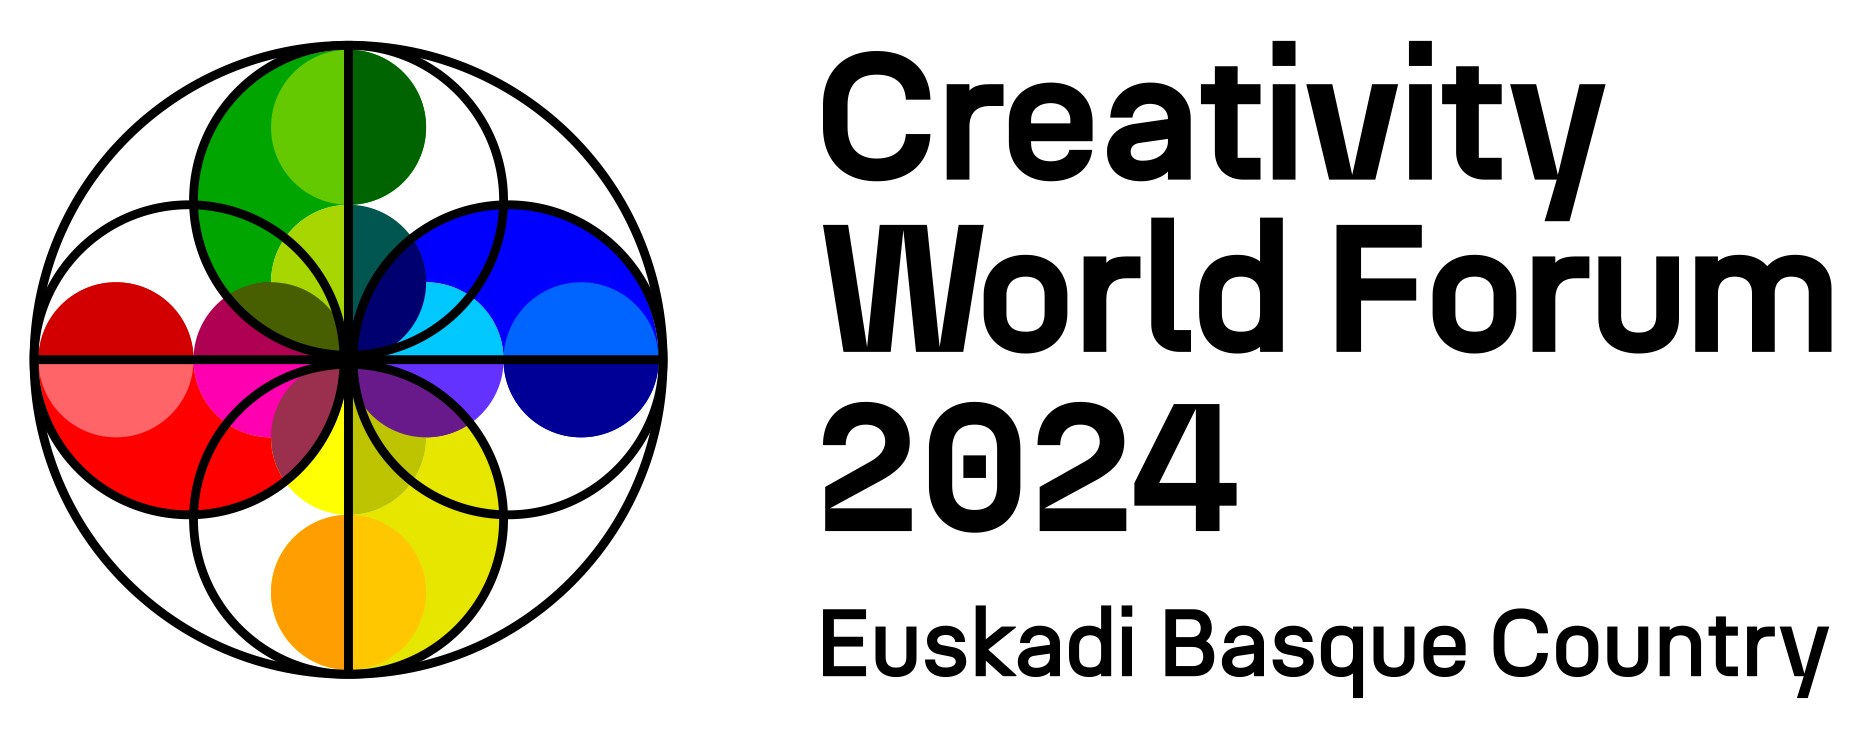 Creativity World Forum